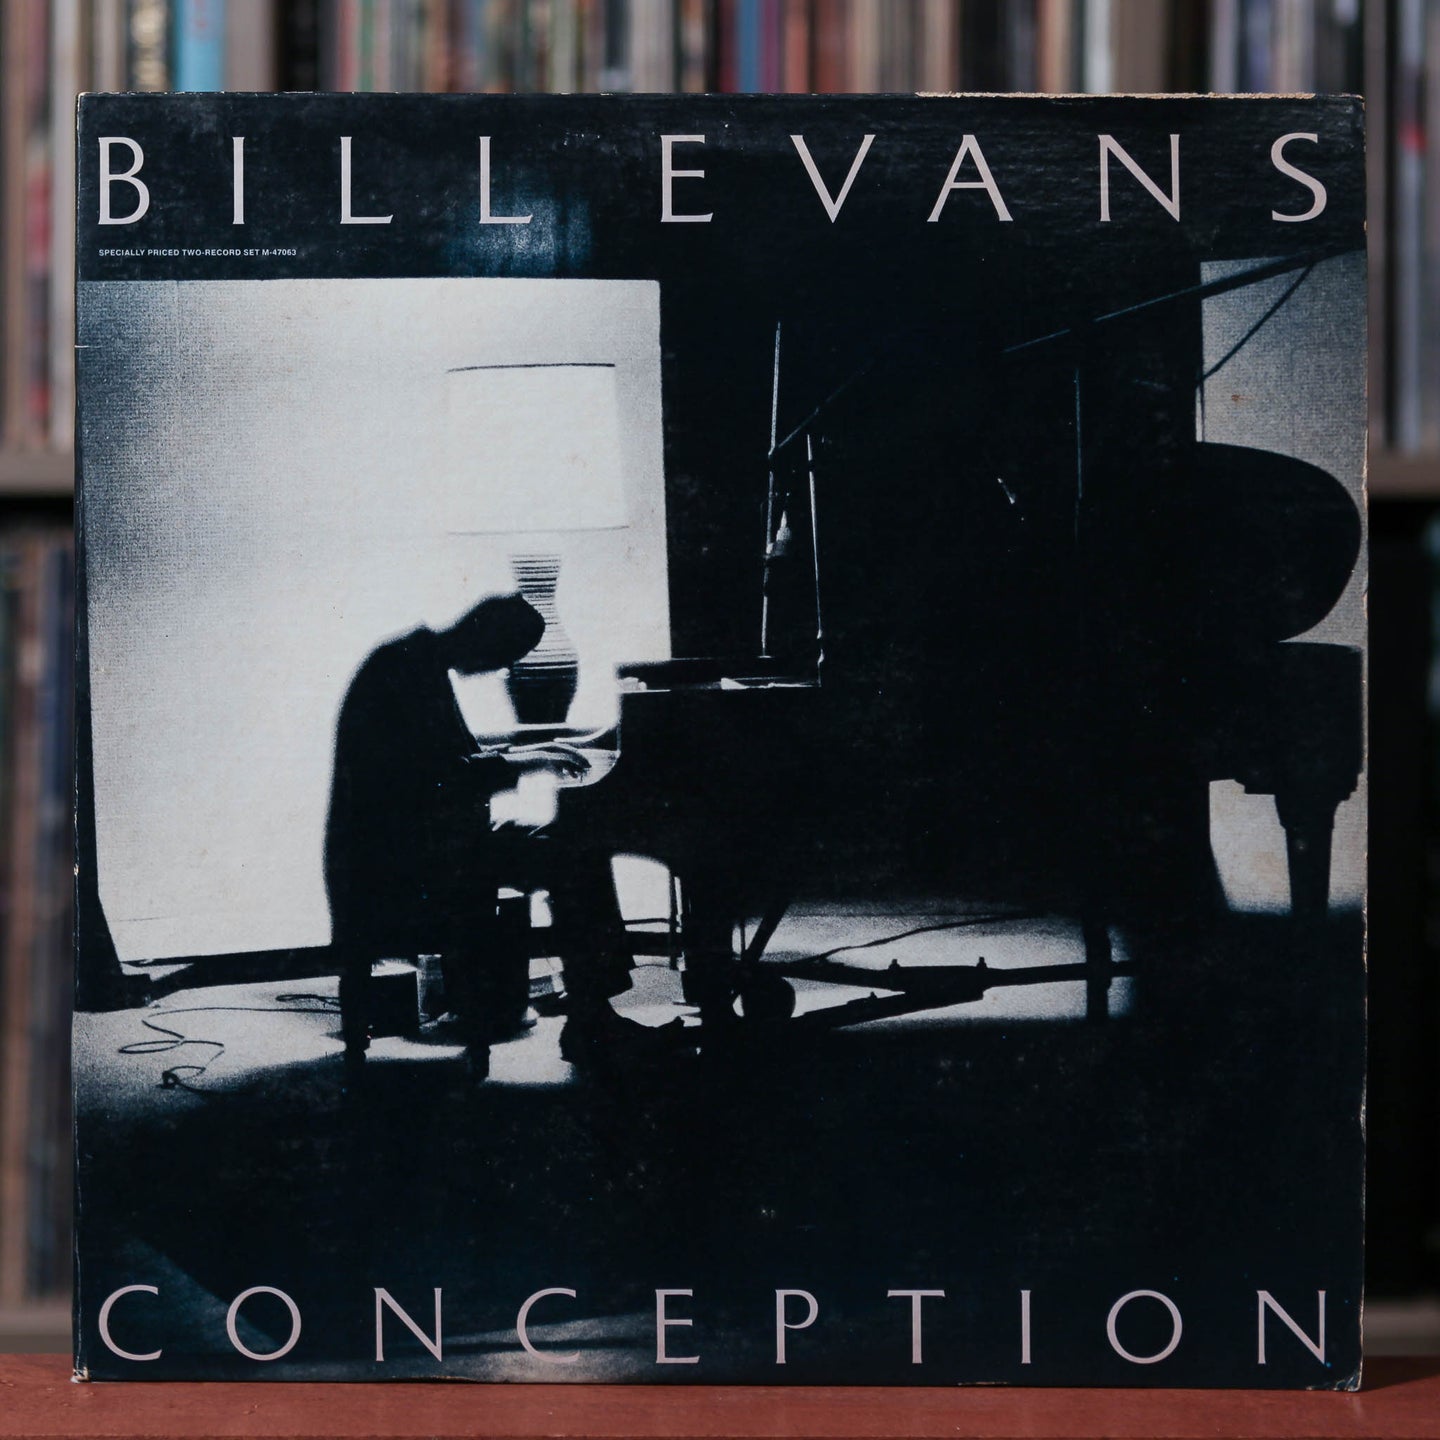 Bill Evans - 2LP - Conception - 1981 Milestone